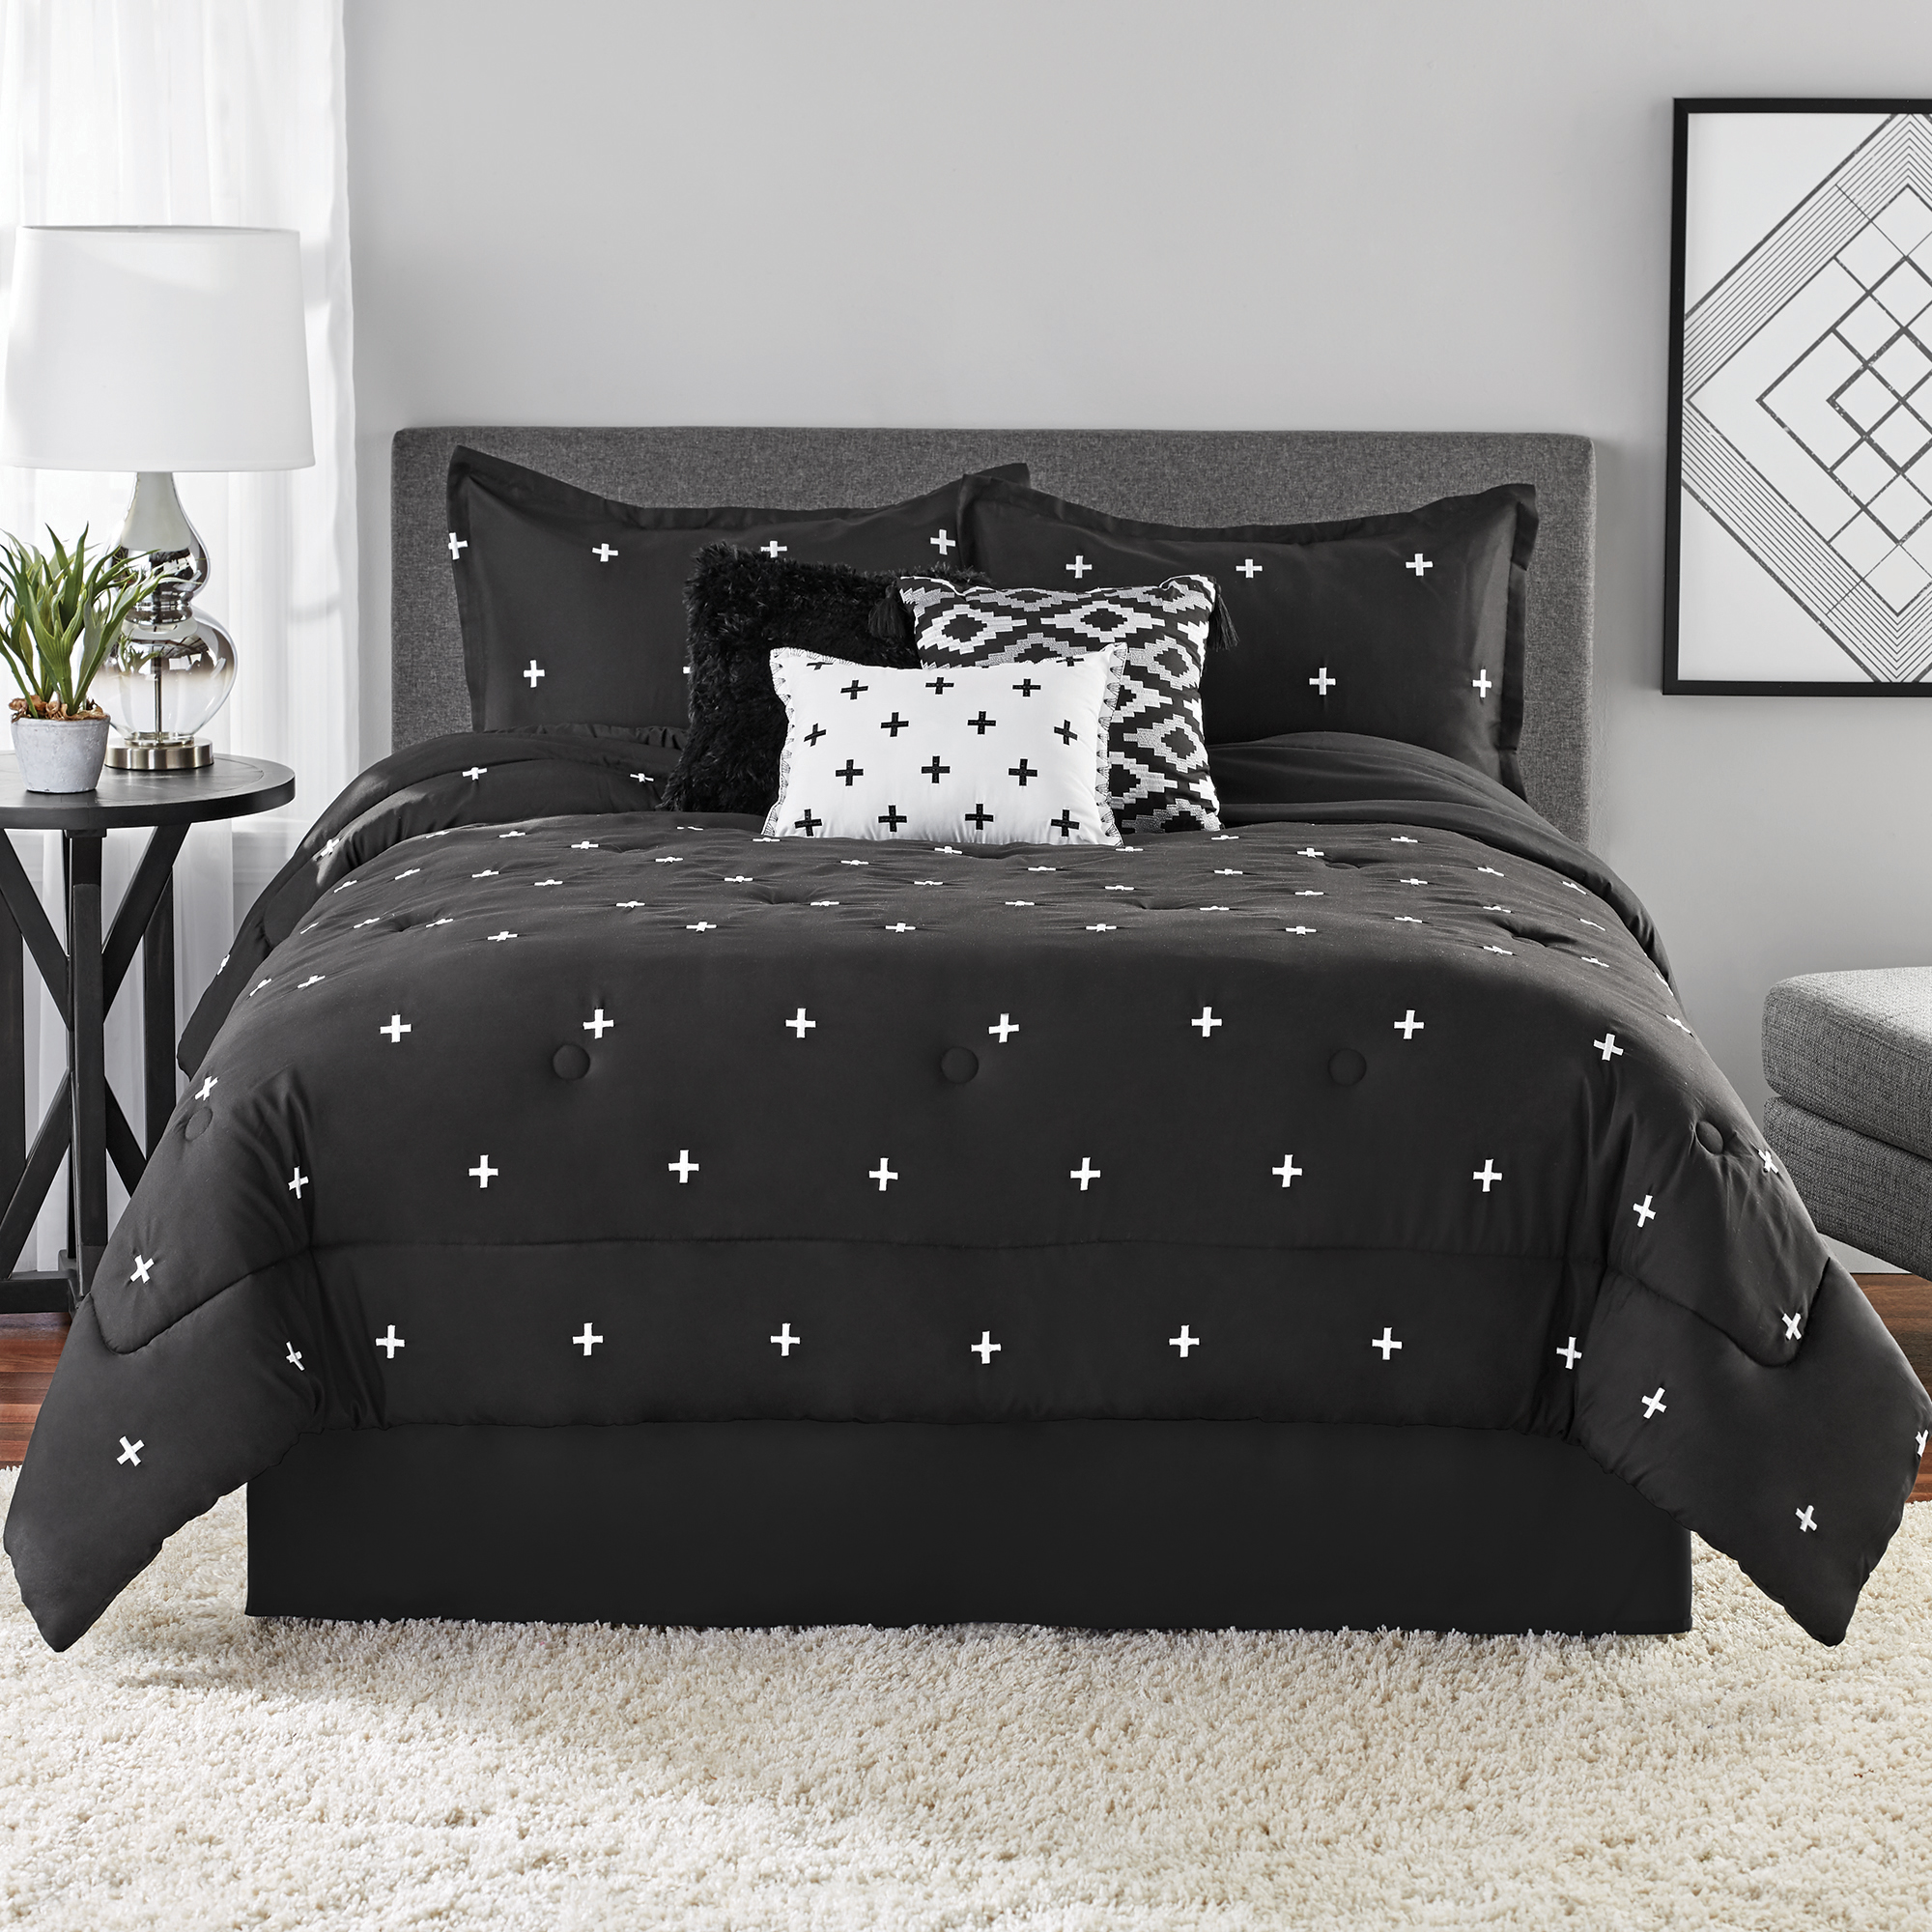 Mainstays 7-Piece Black Embroidered Bedding Comforter Set, King - image 1 of 6